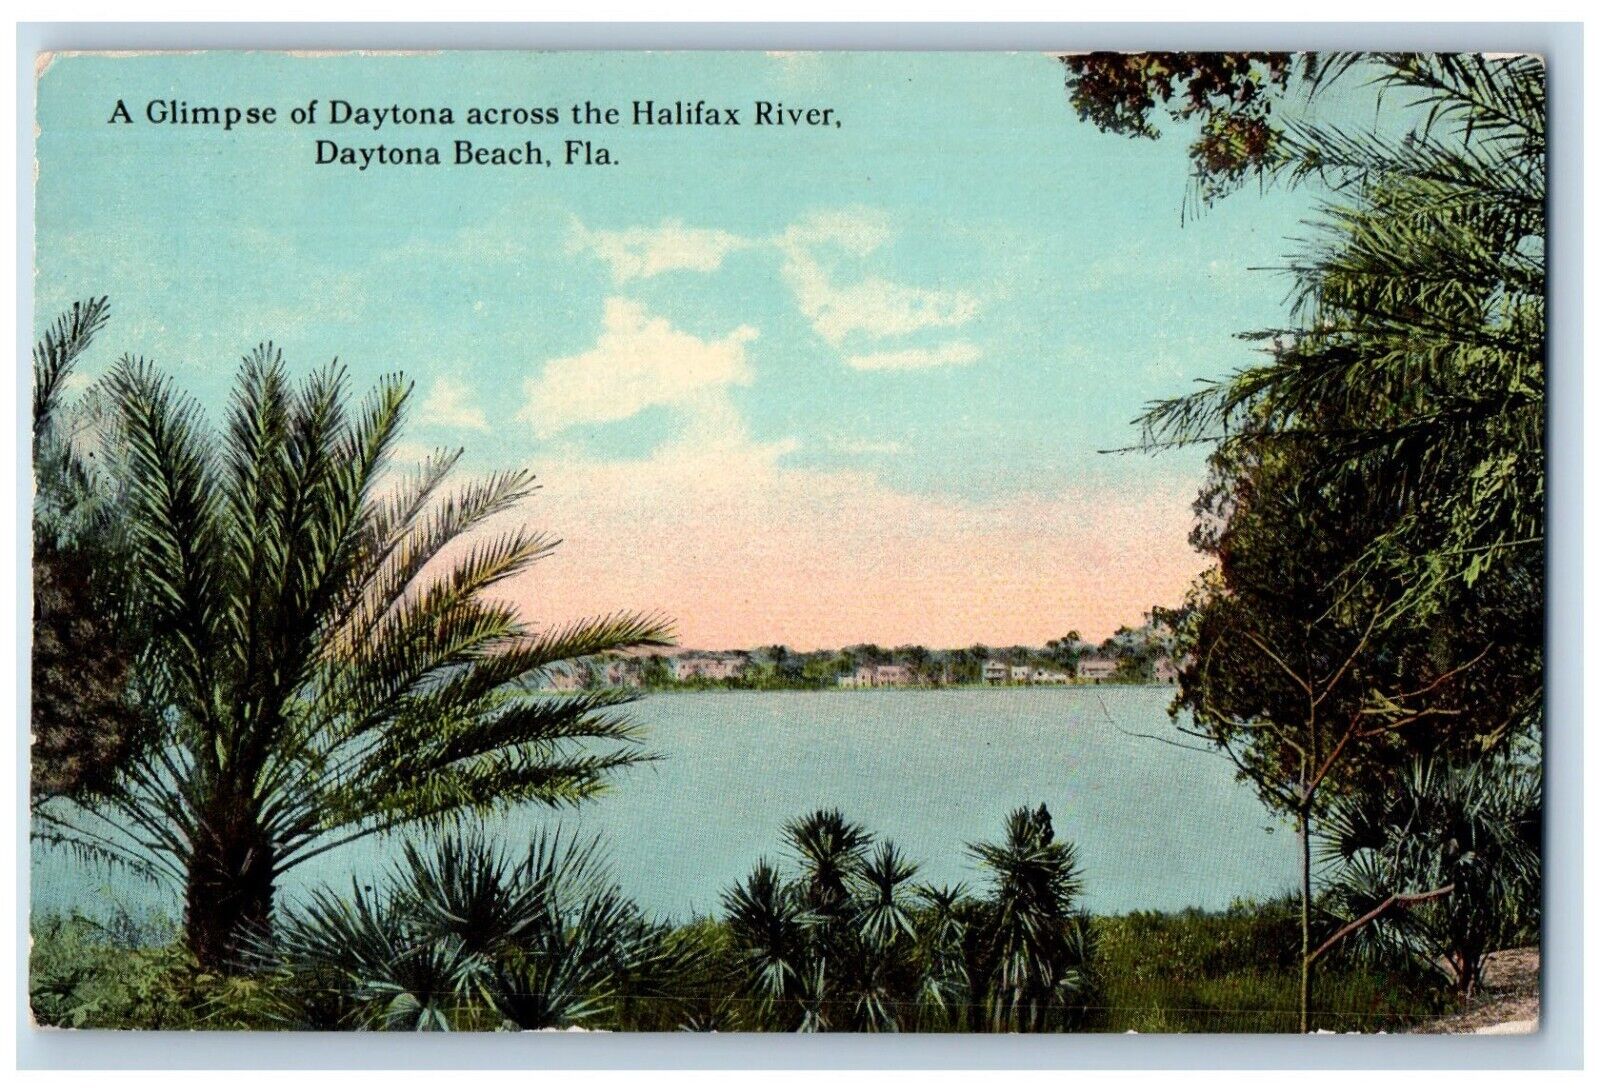 Daytona Beach Florida Postcard Glimpse Daytona Across Halifax River 1910 Vintage